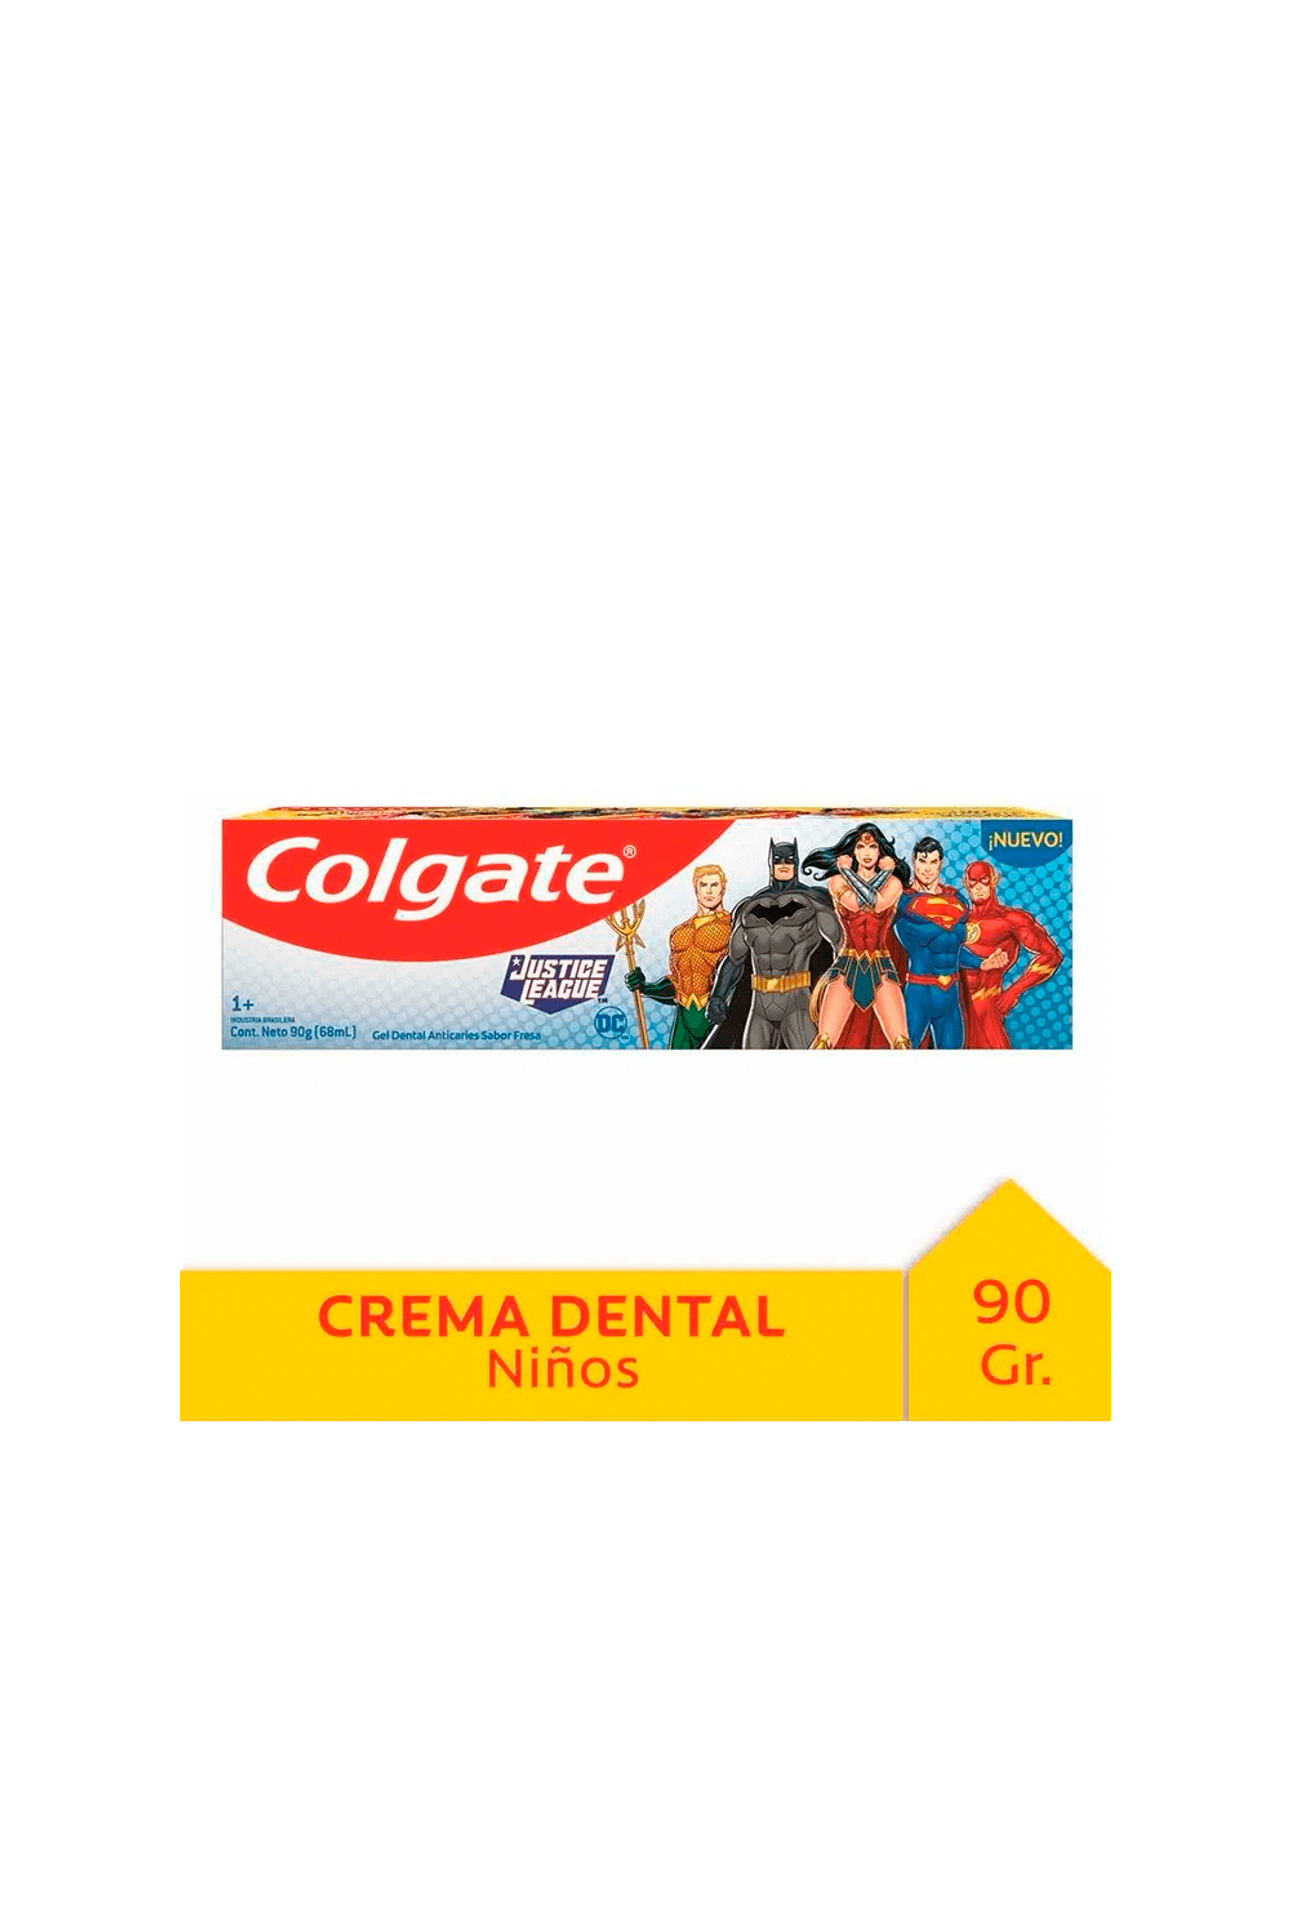 2117661_Colgate-Crema-Dental-Kids-Liga-de-la-Justicia-x-90-ml_img1